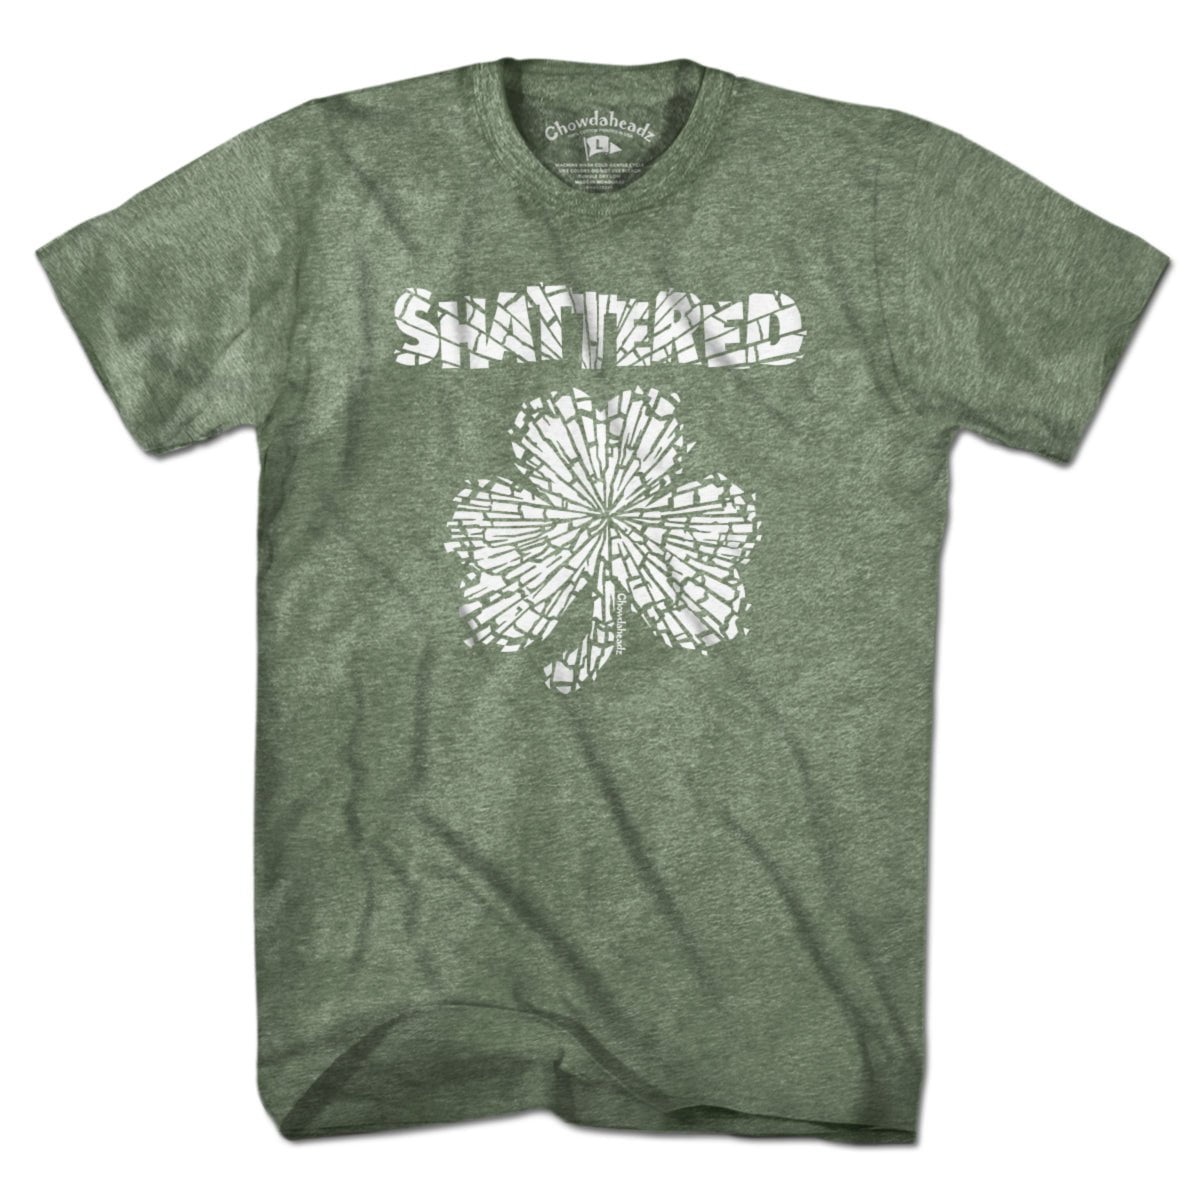 Shattered Shamrock T-Shirt - Chowdaheadz